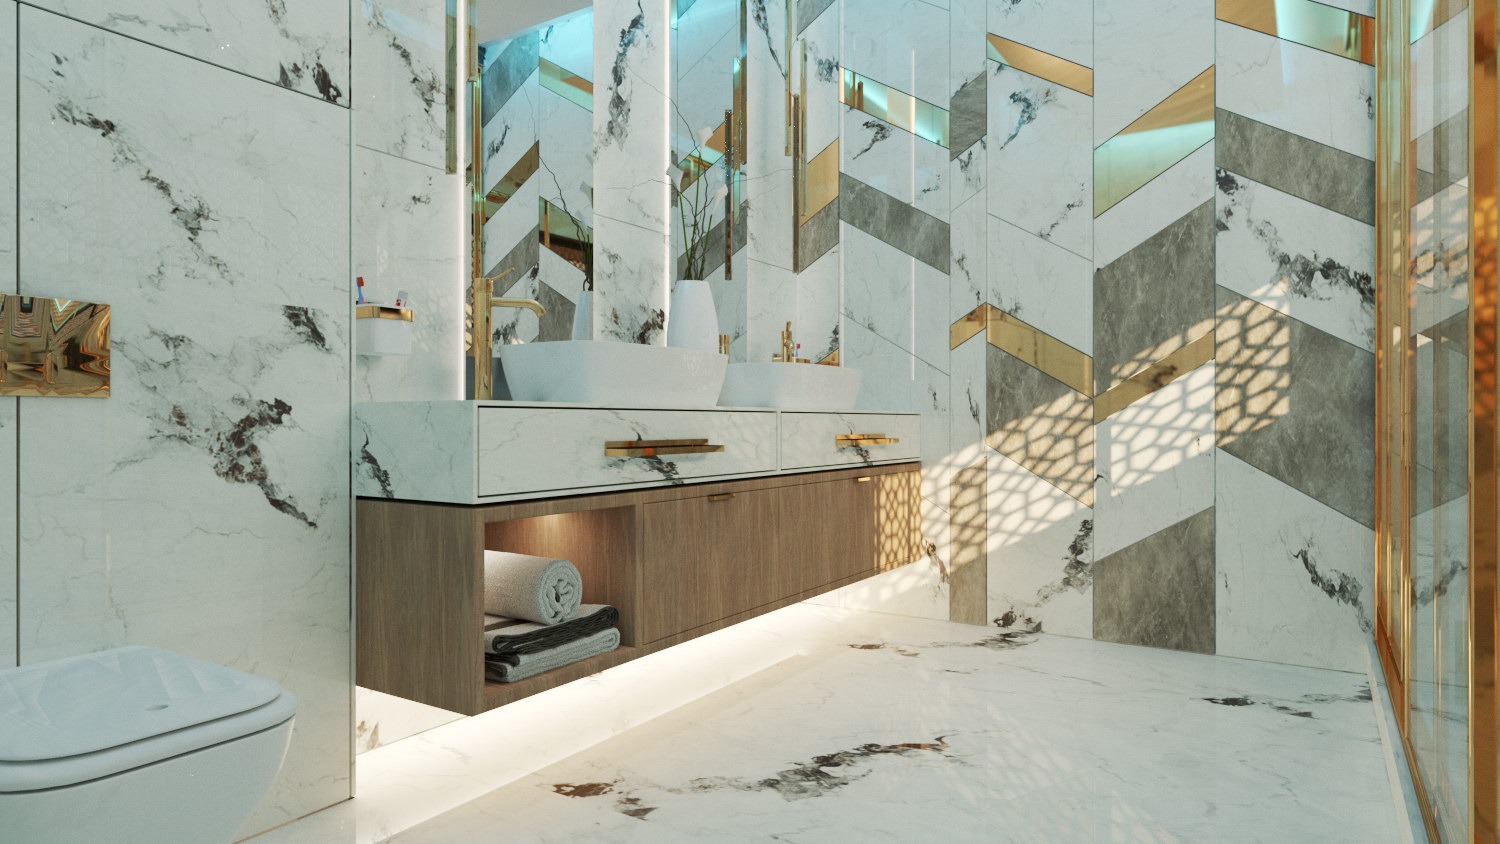 https://nbc-arhitect.ro/wp-content/uploads/2020/10/NBC-Arhitect-_-residences-_-Mogo-Villa-_-Romania-_-interior-view-_-bathroom_3.jpg